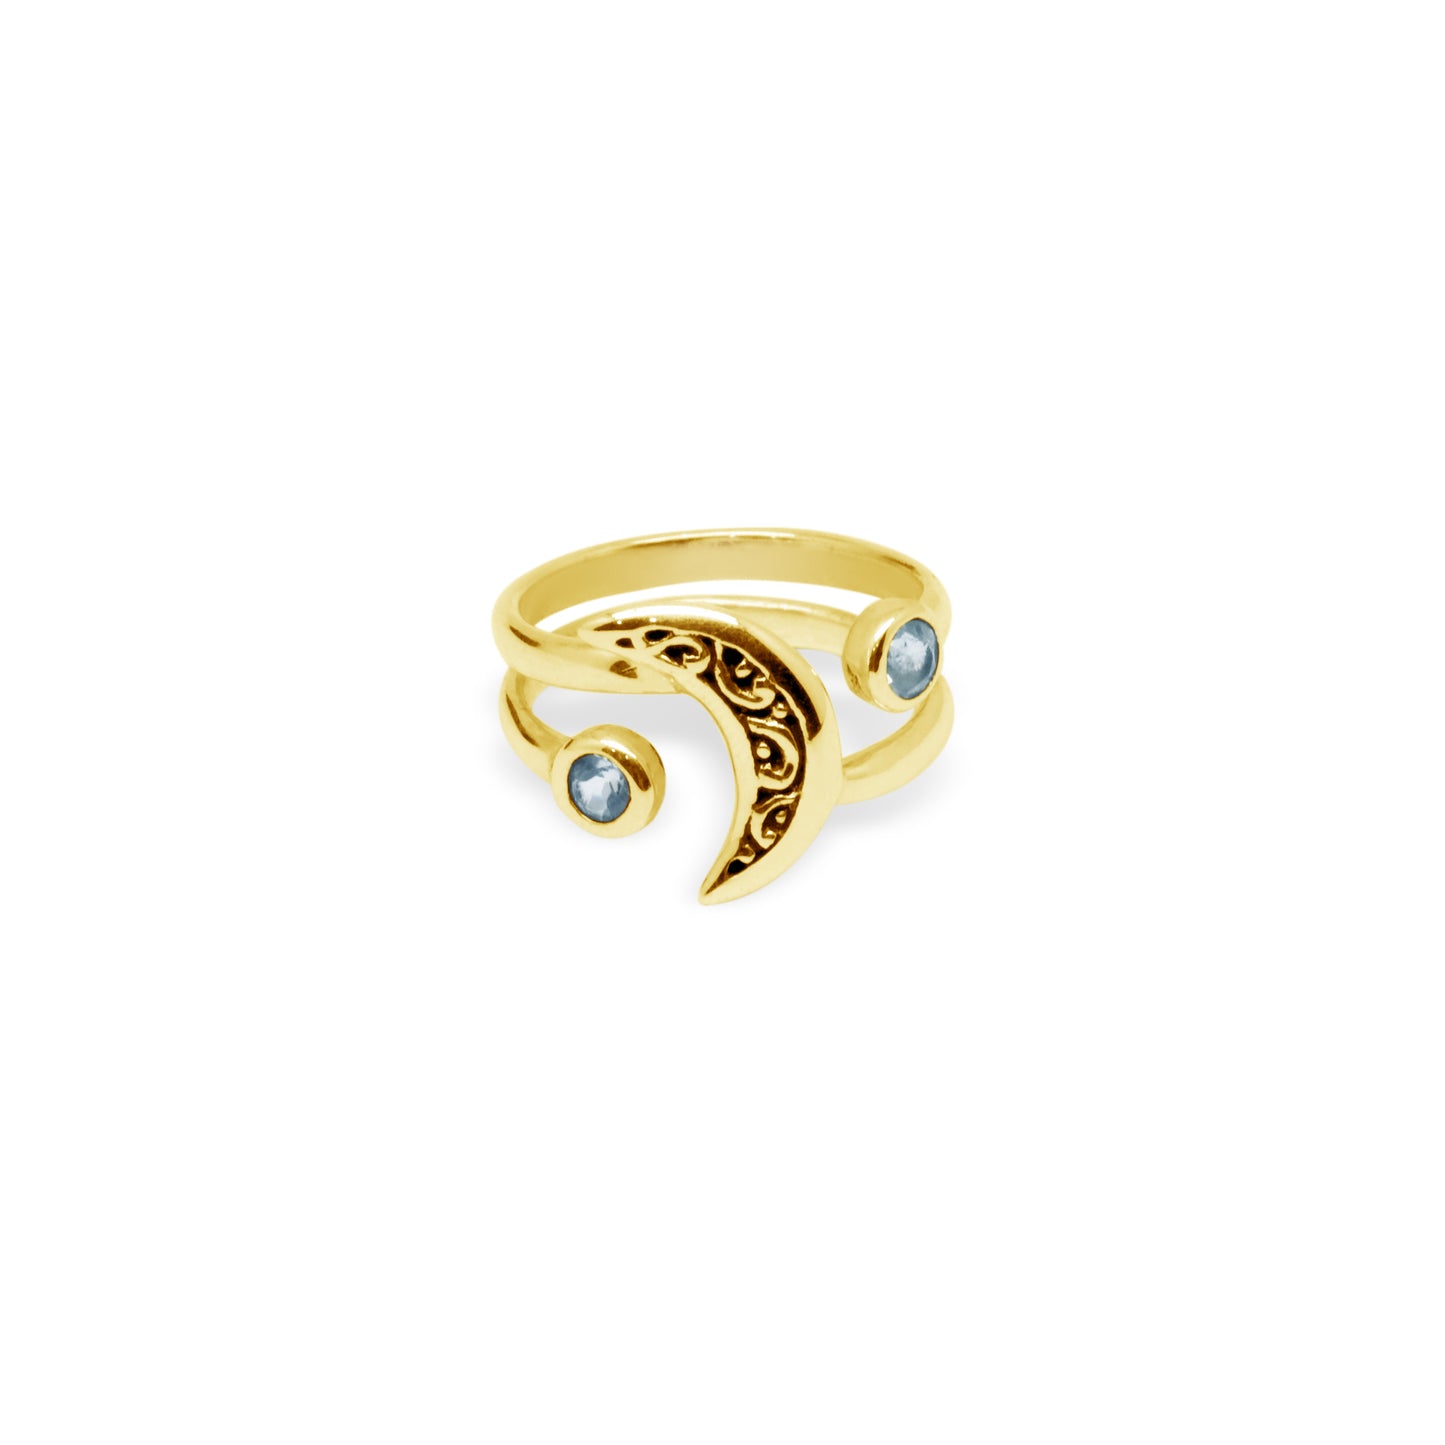 Stellar Ring: Celestial 18k gold Moon Ring